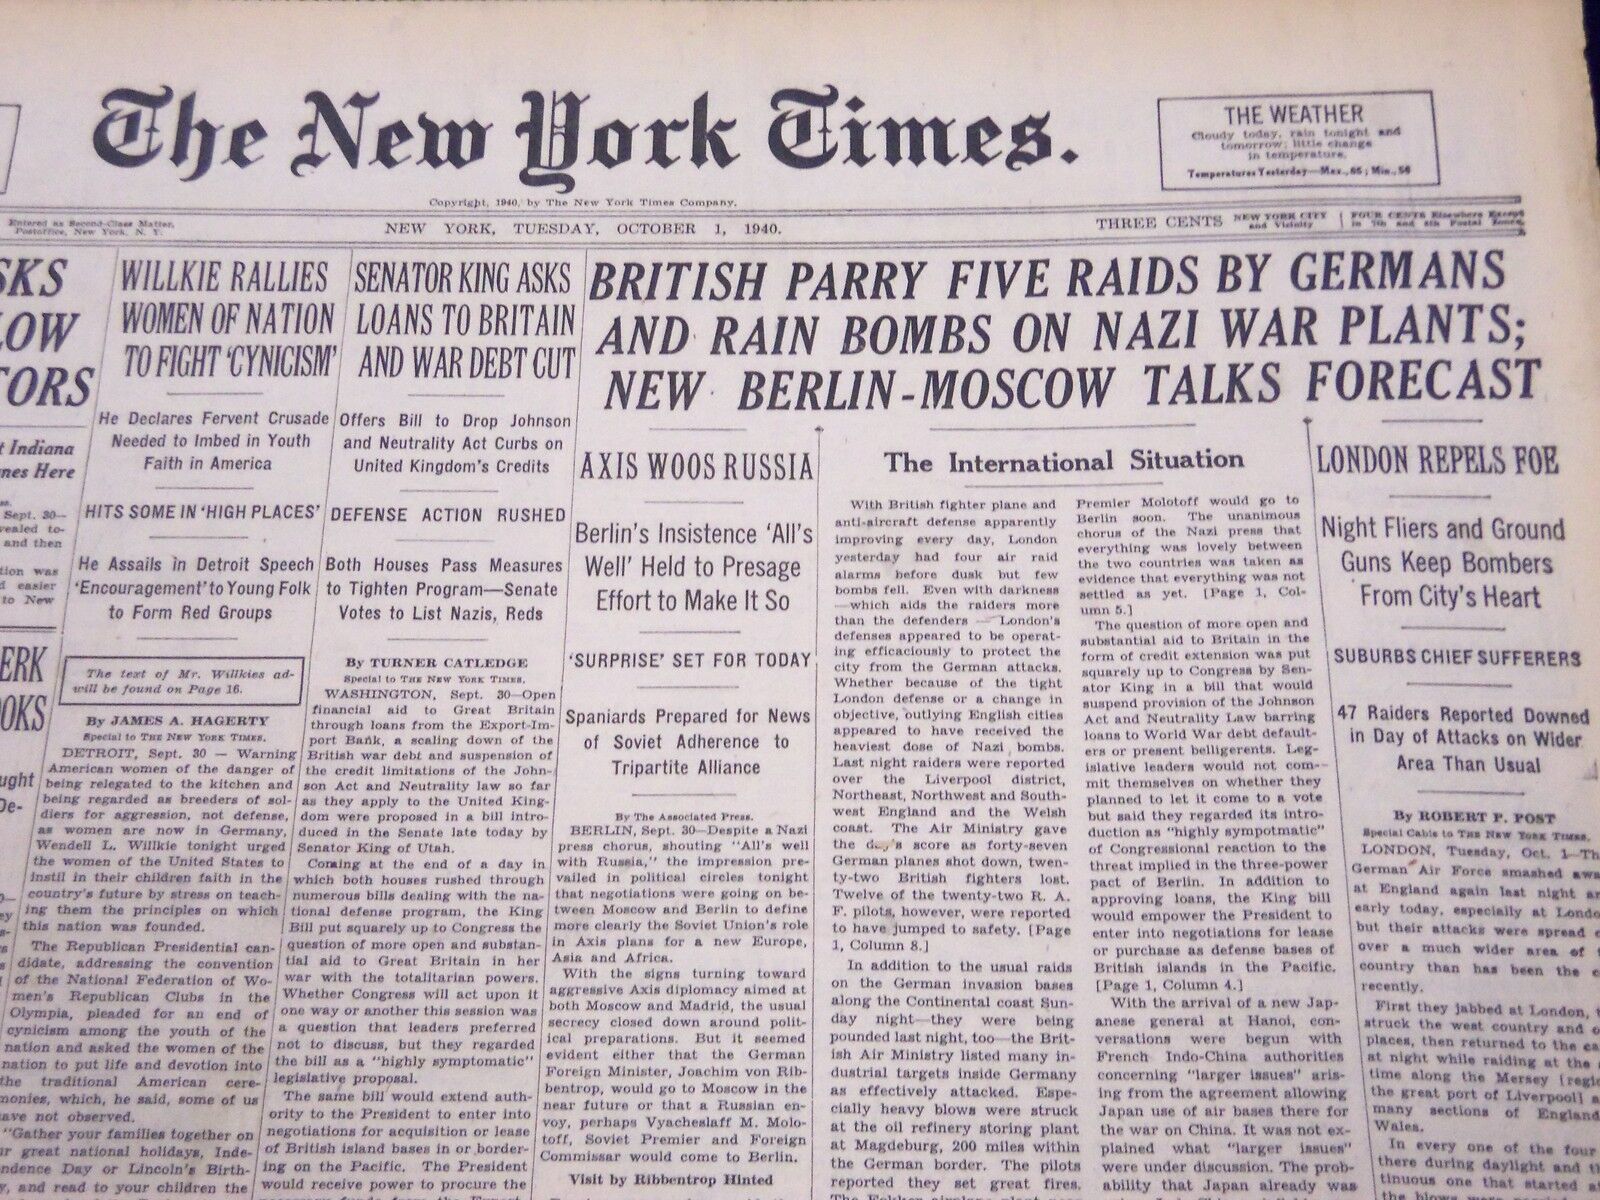 1940 OCT 1 NEW YORK TIMES - BRITISH PARRY FINE RAIDS BY GERMANS - NT 223